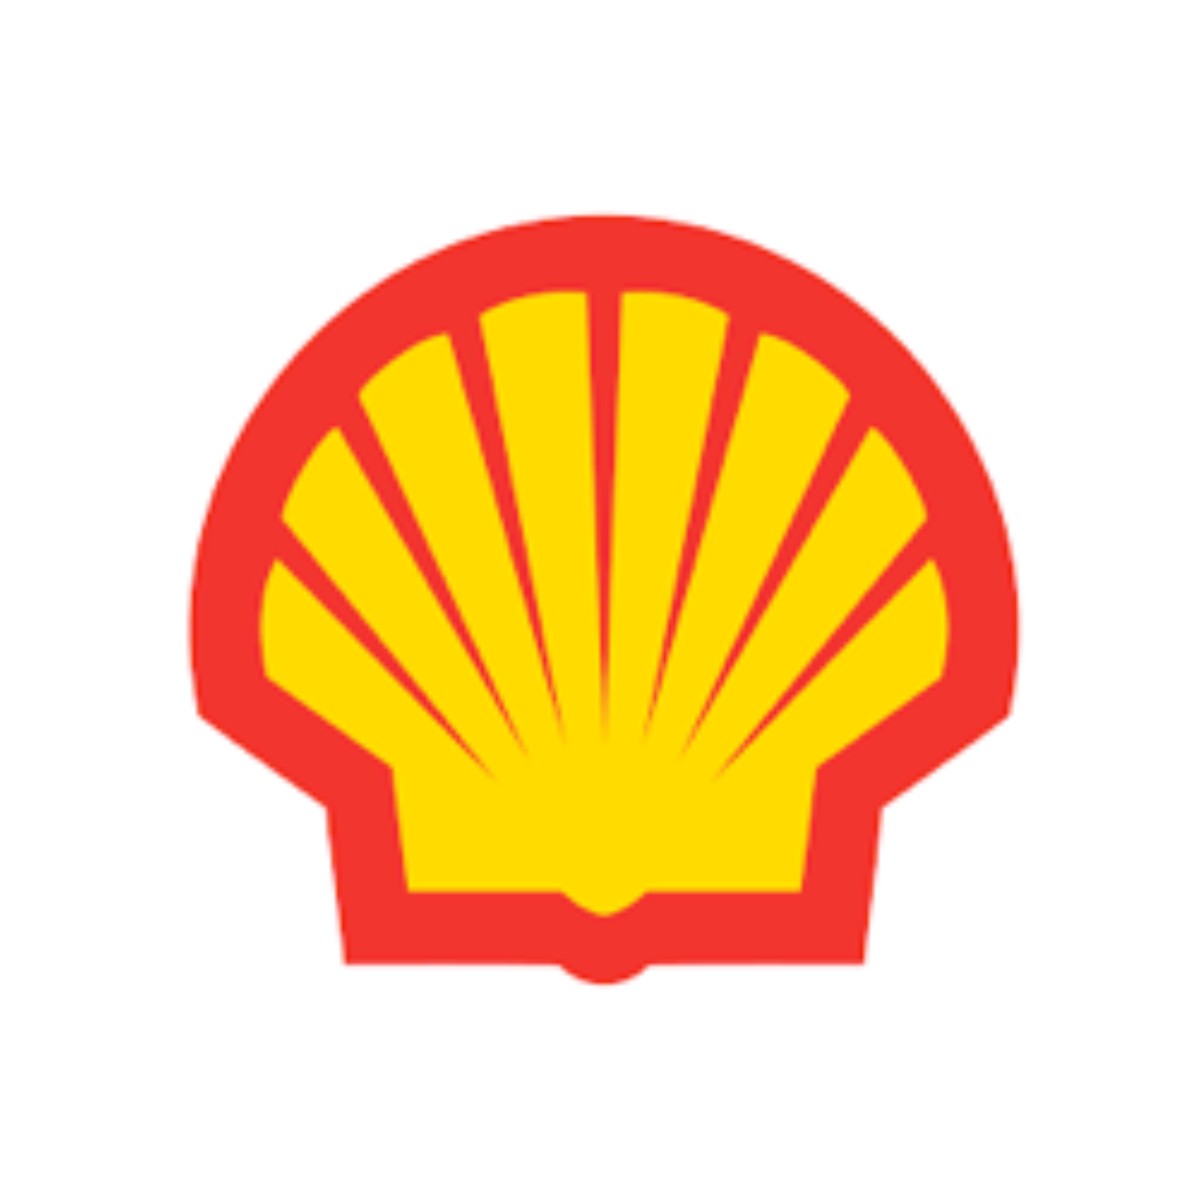 Shell 2023 Graduate Programme (Formal Training Opportunities)